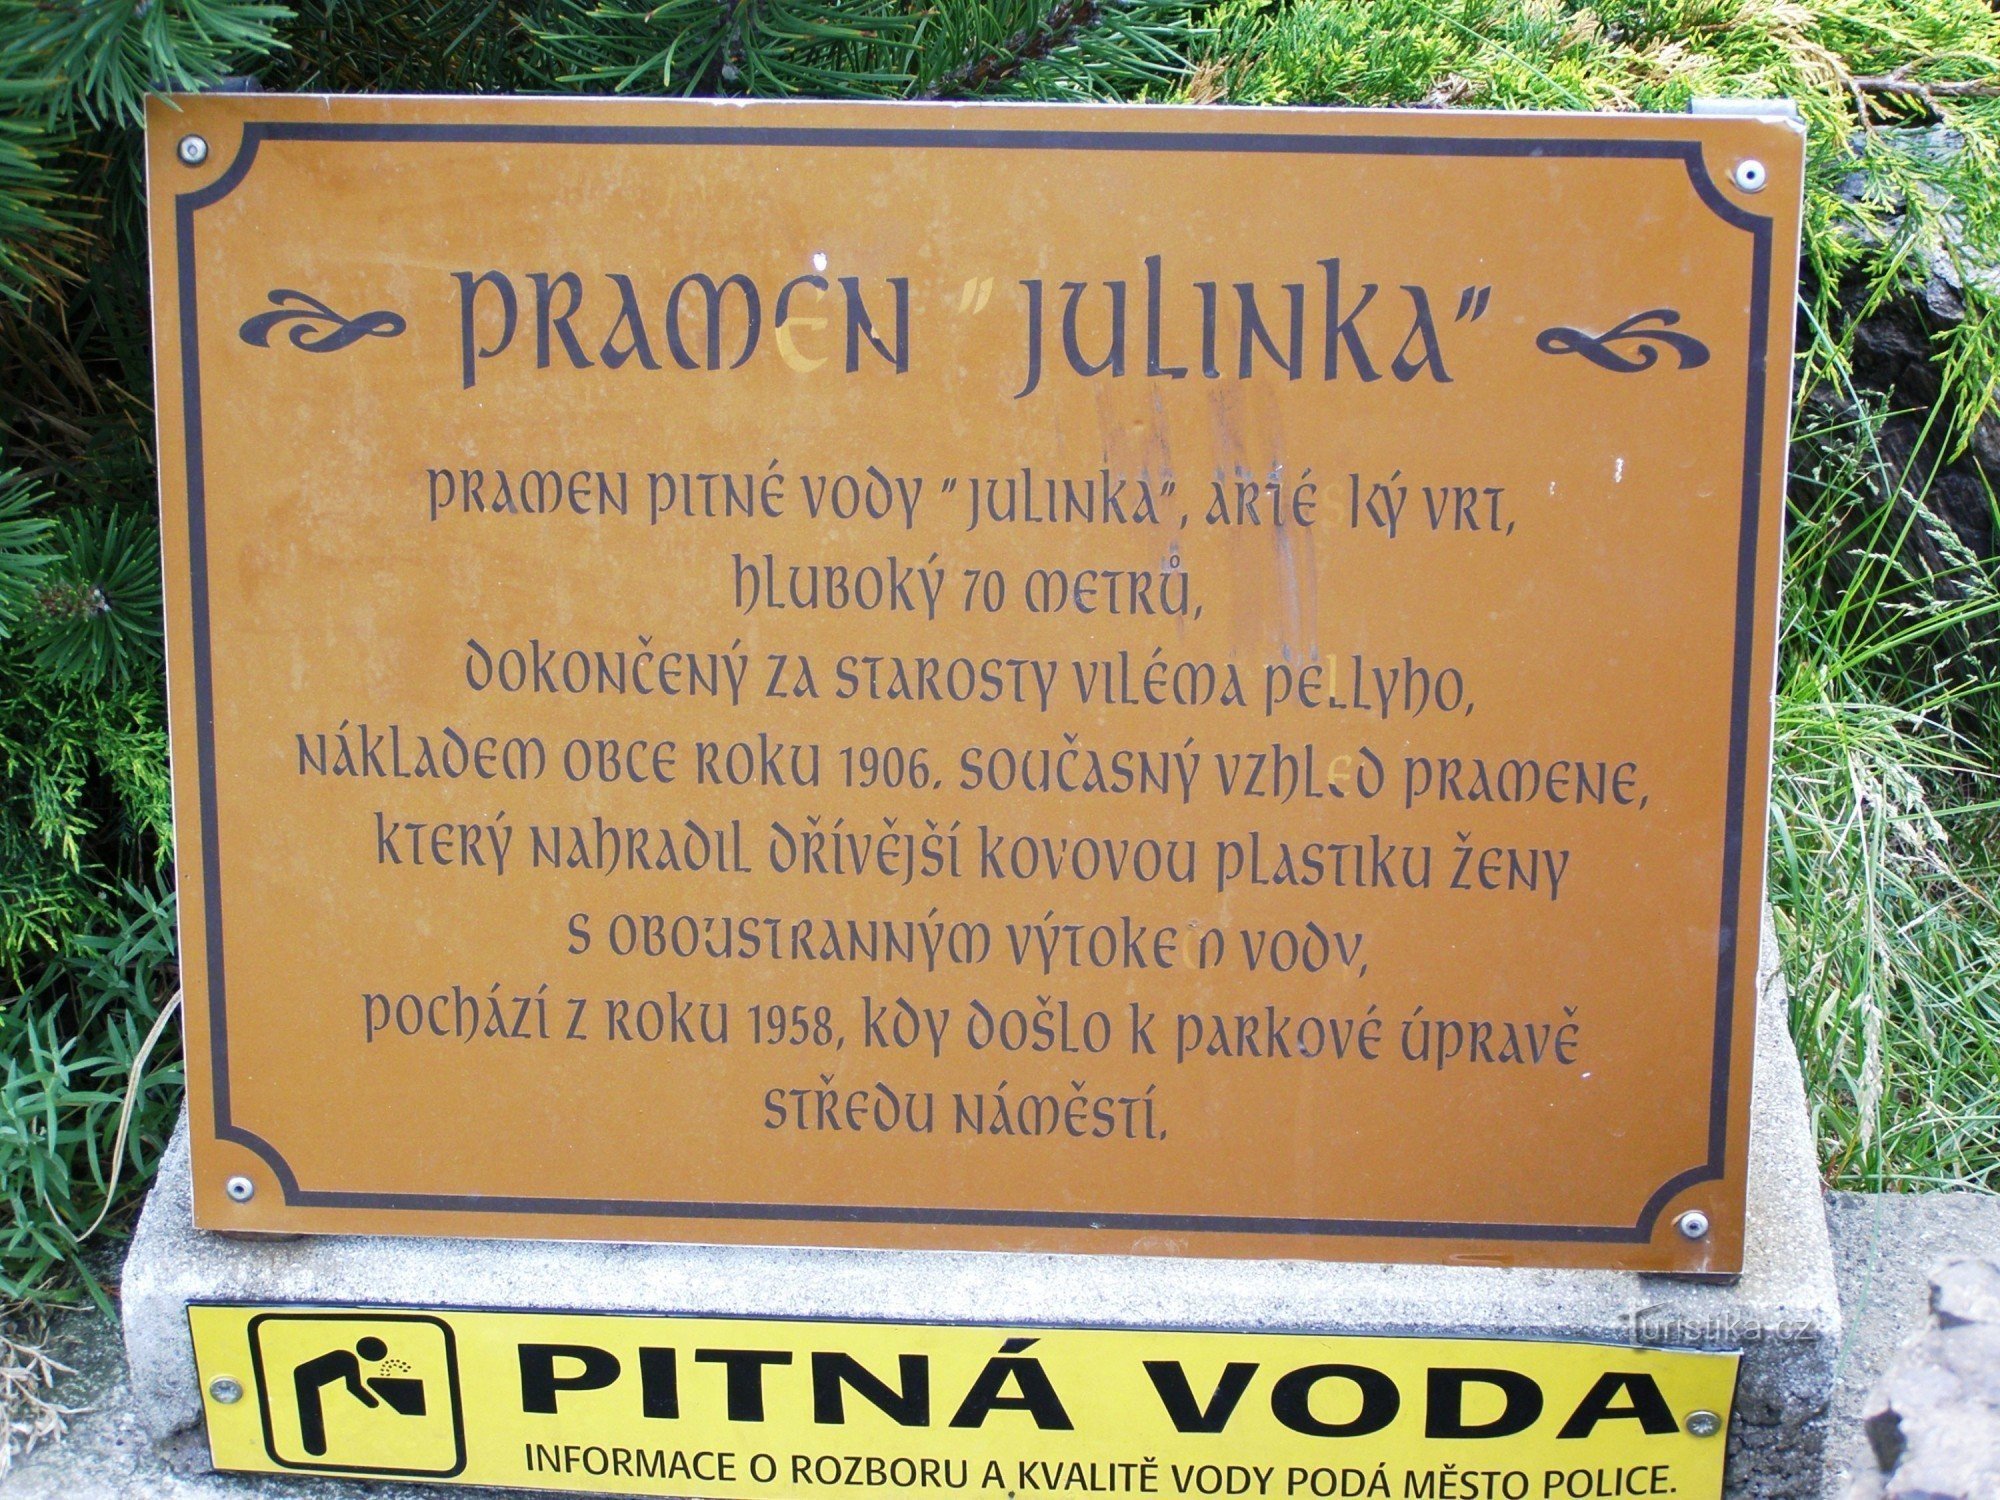 Kệ trên Metují - mùa xuân Julinka